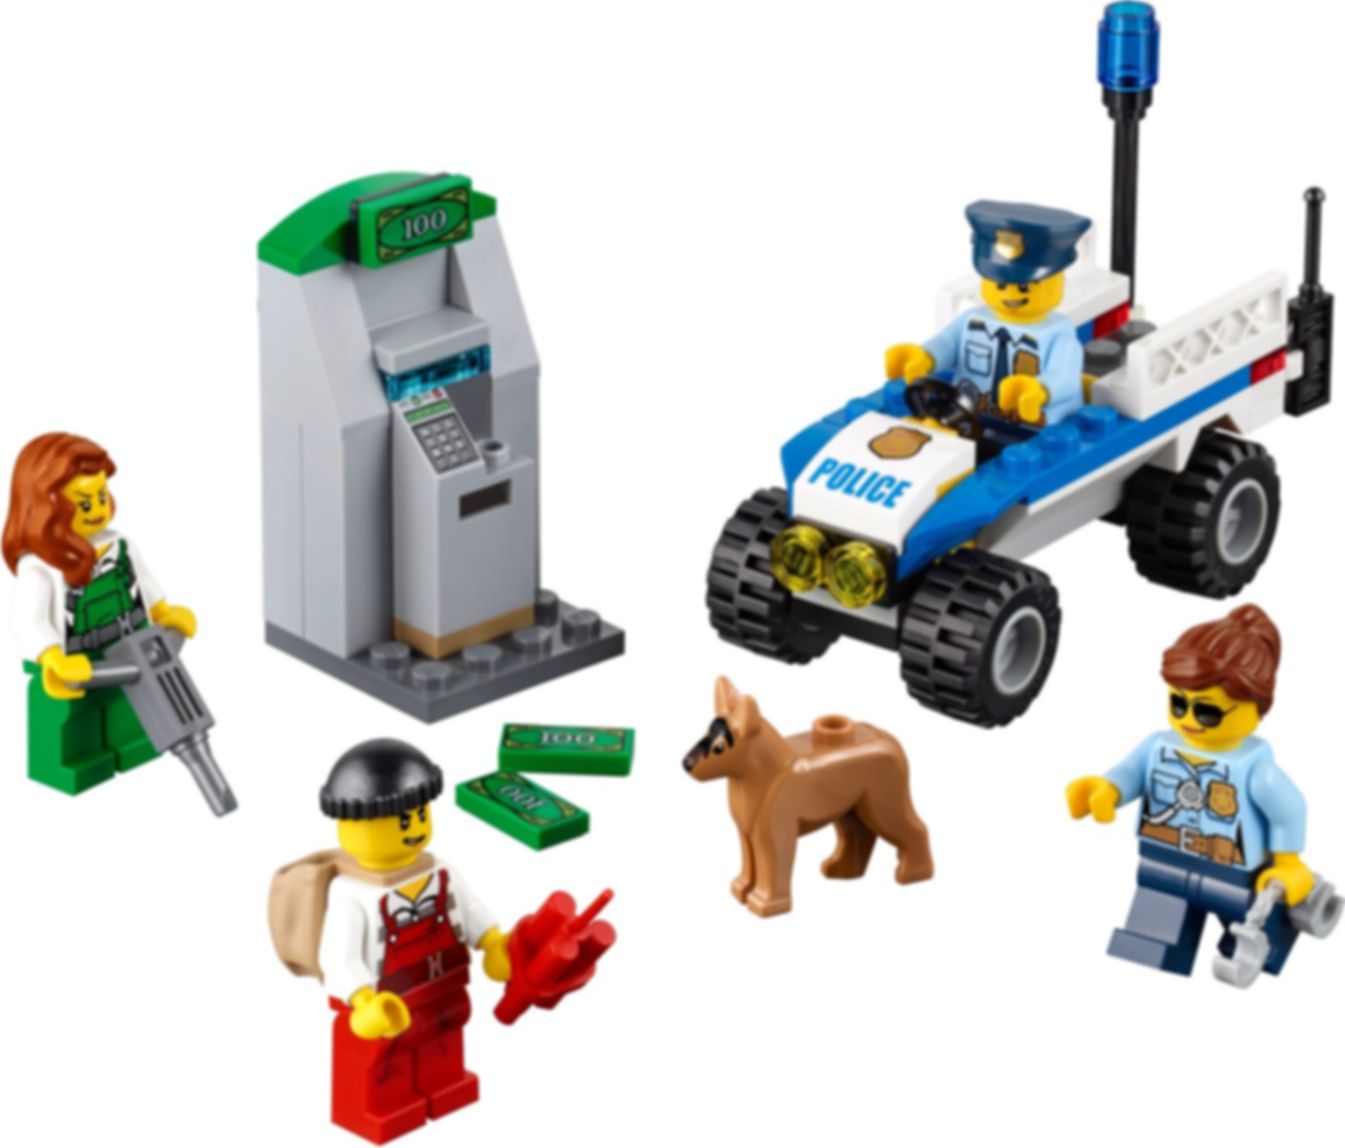 LEGO® City Police Starter Set components